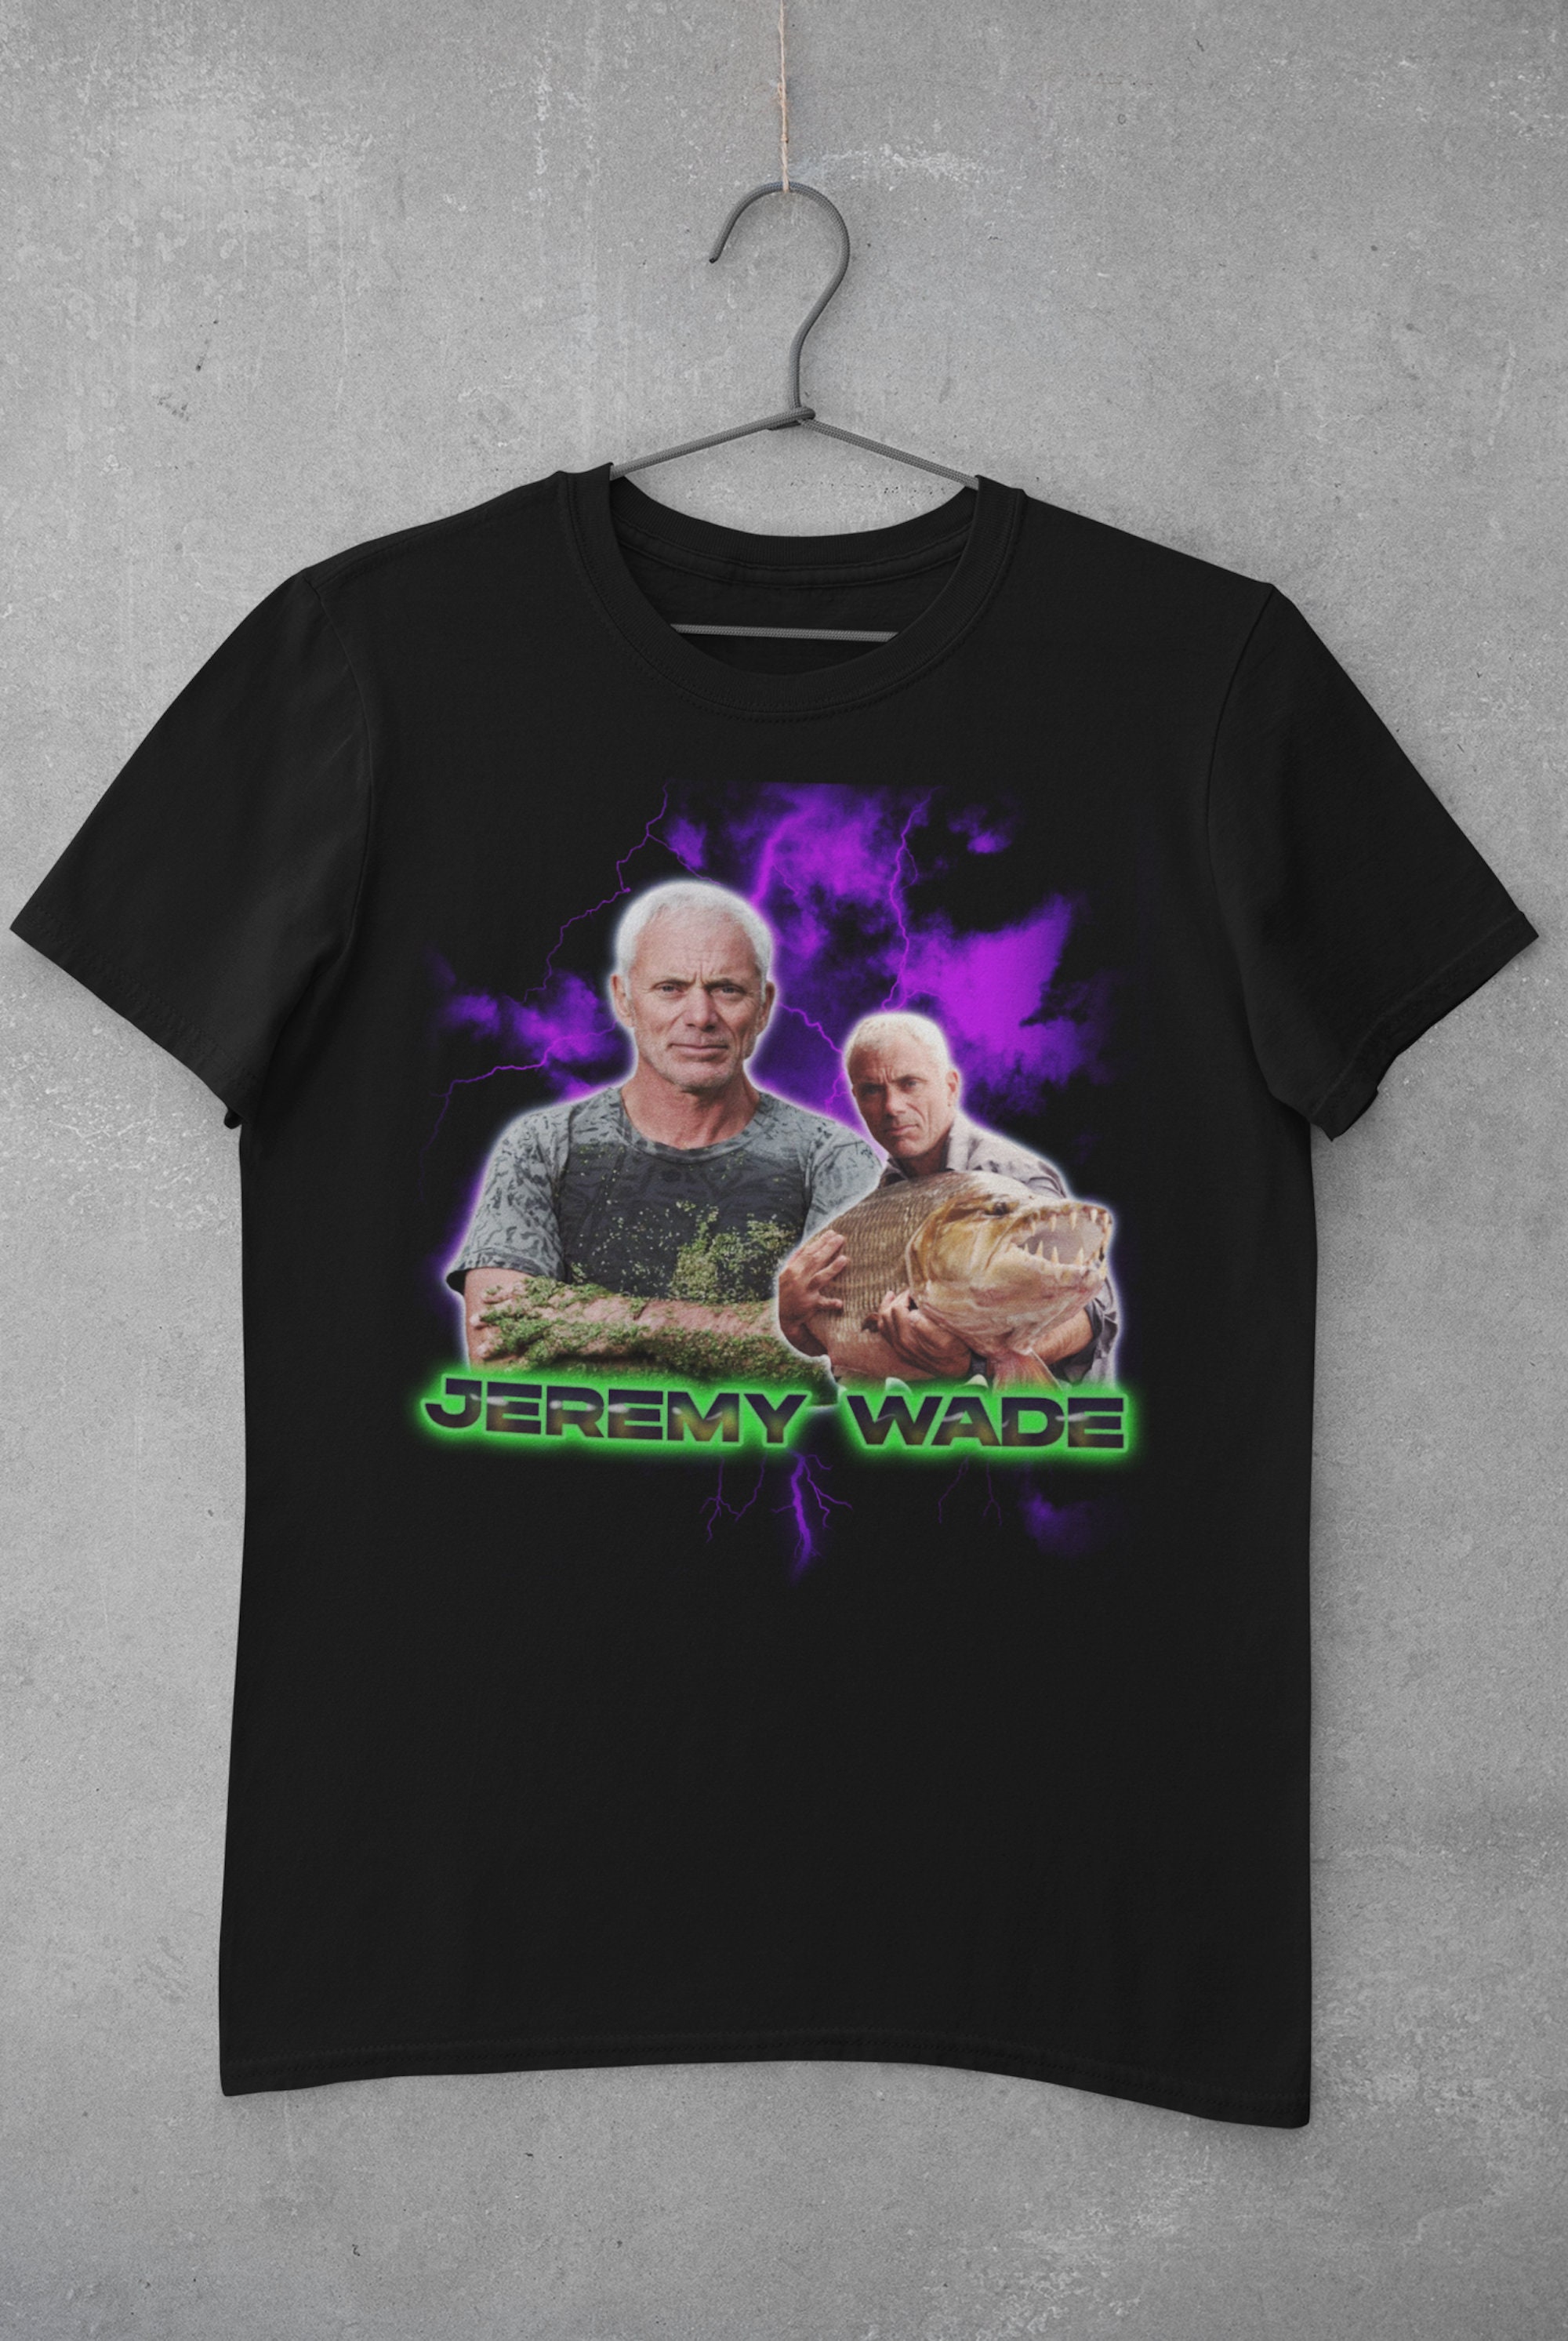 Jeremy Wade Fishing T-Shirt. Retro 90's Design. Jeremy Wade Unofficial Fan Merch. for Fans of River Monsters & Fishing. Meme Tribute Tee